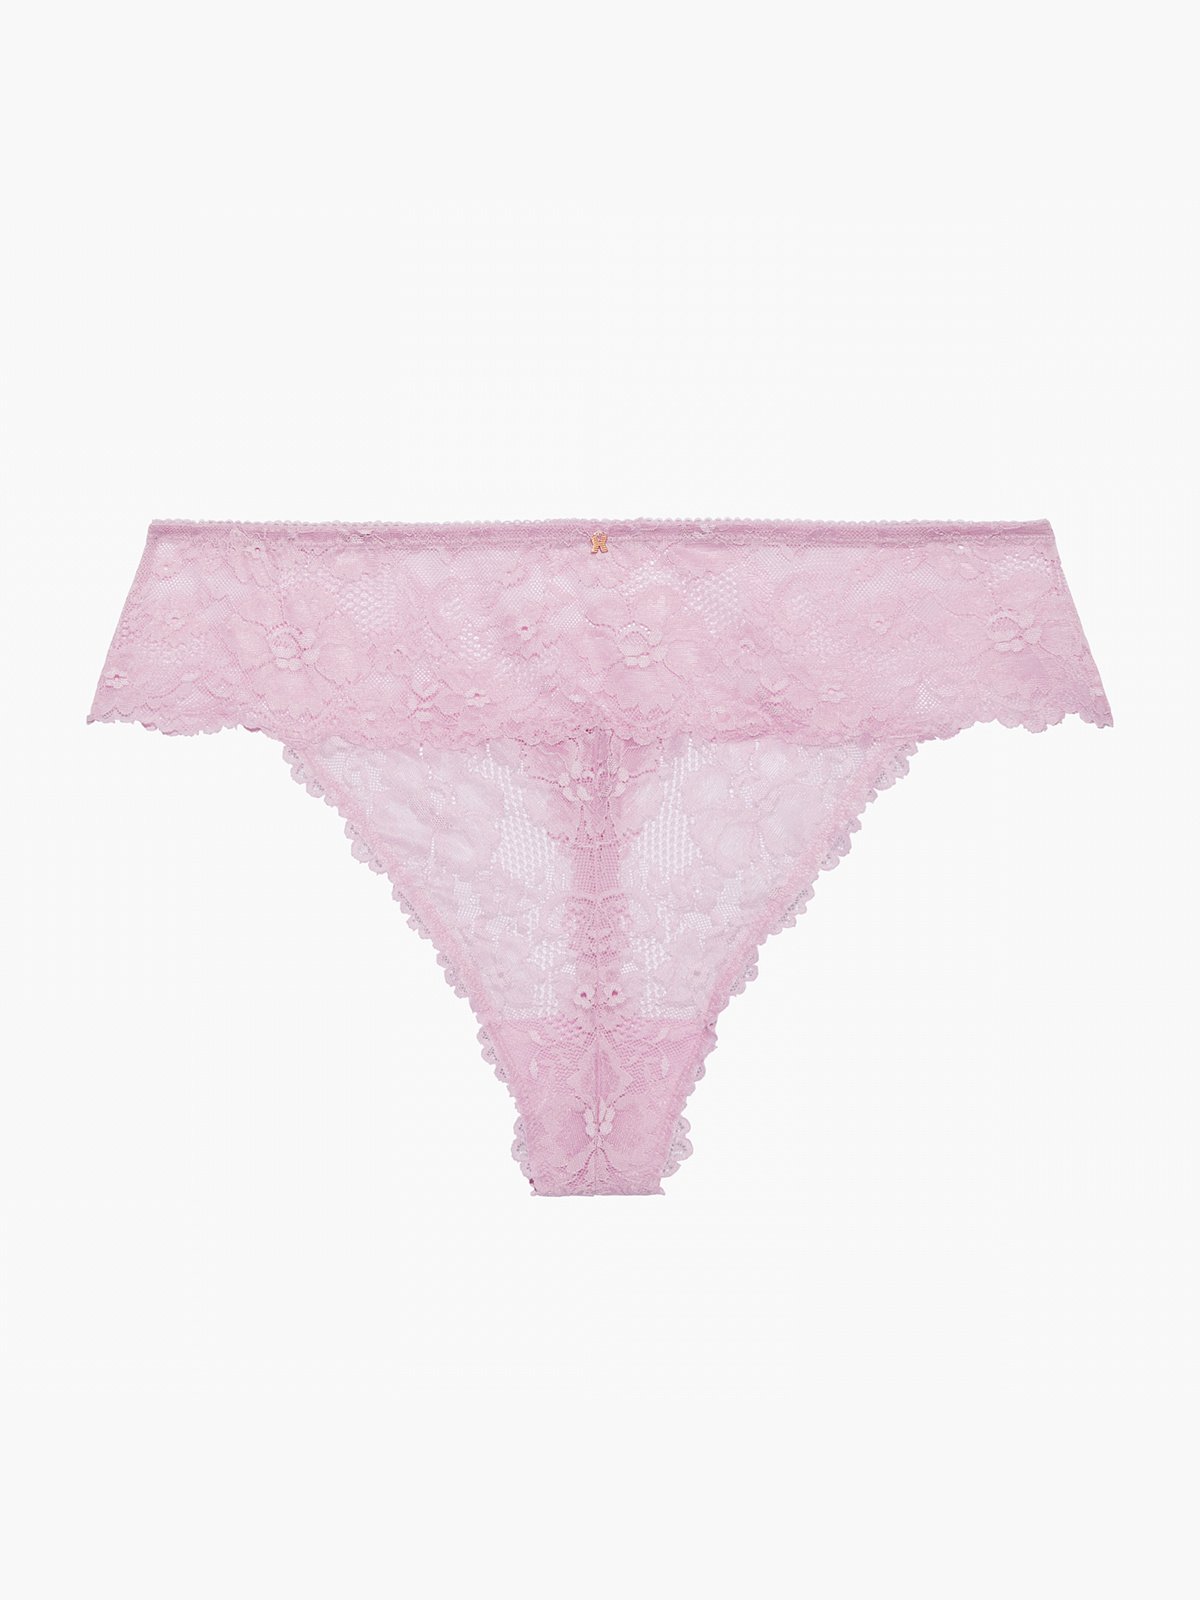 Women's Floral Print Lace Cheeky Underwear - Auden Pink S 1 ct